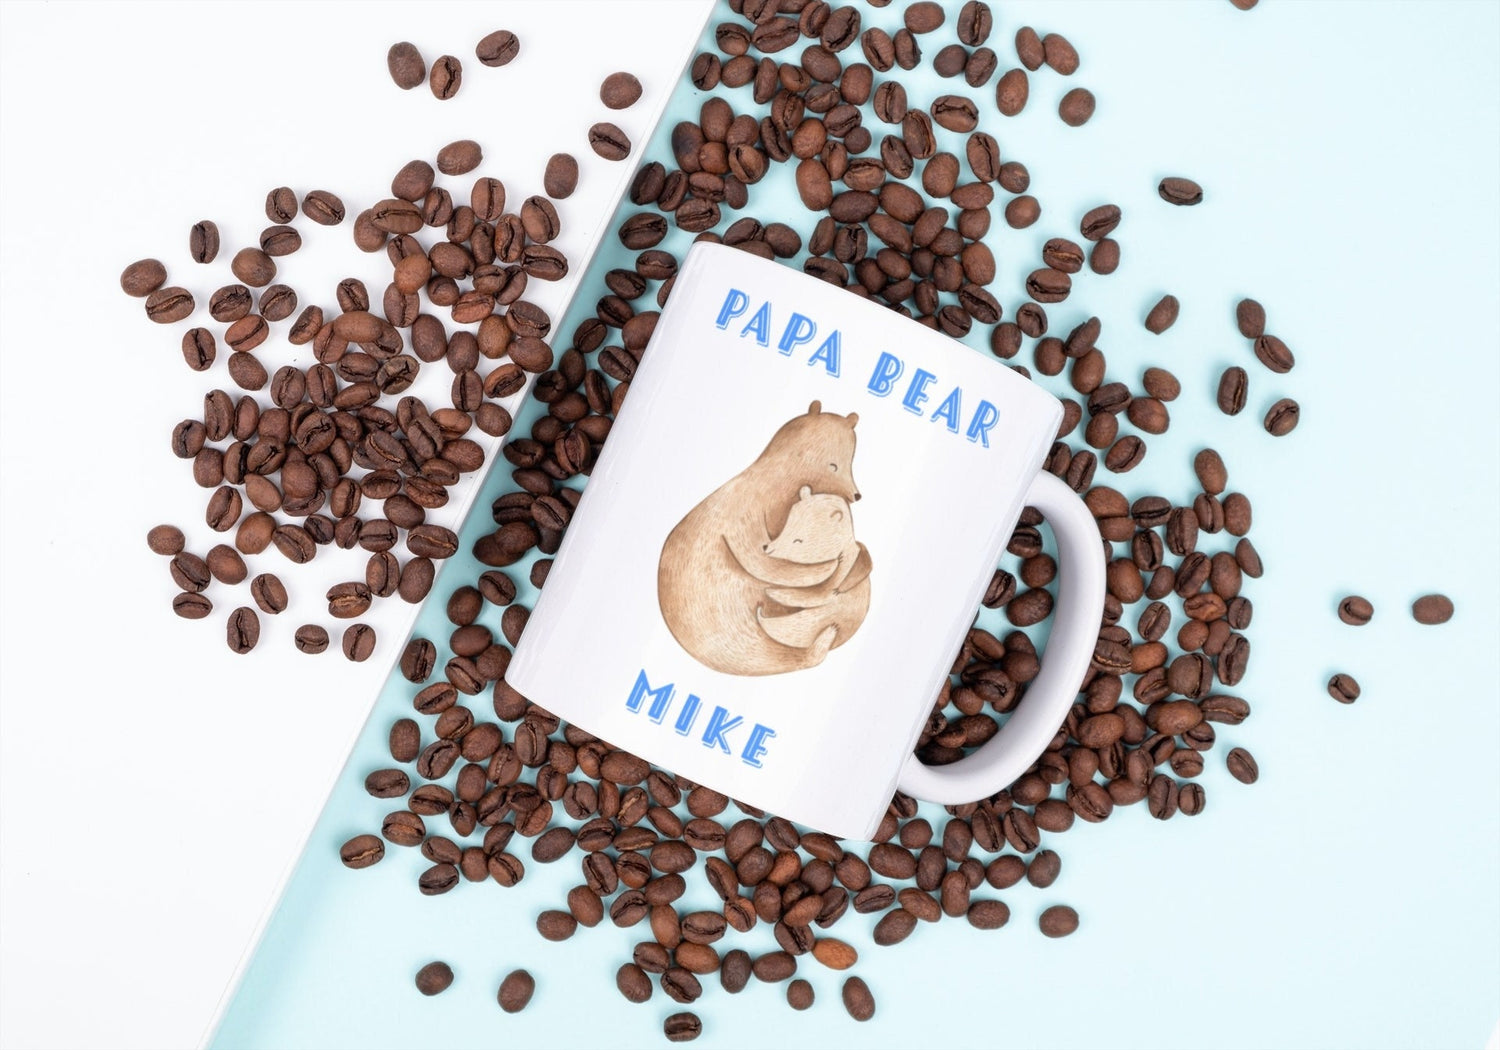 Custom Papa Bear Mugs with Personalized Images